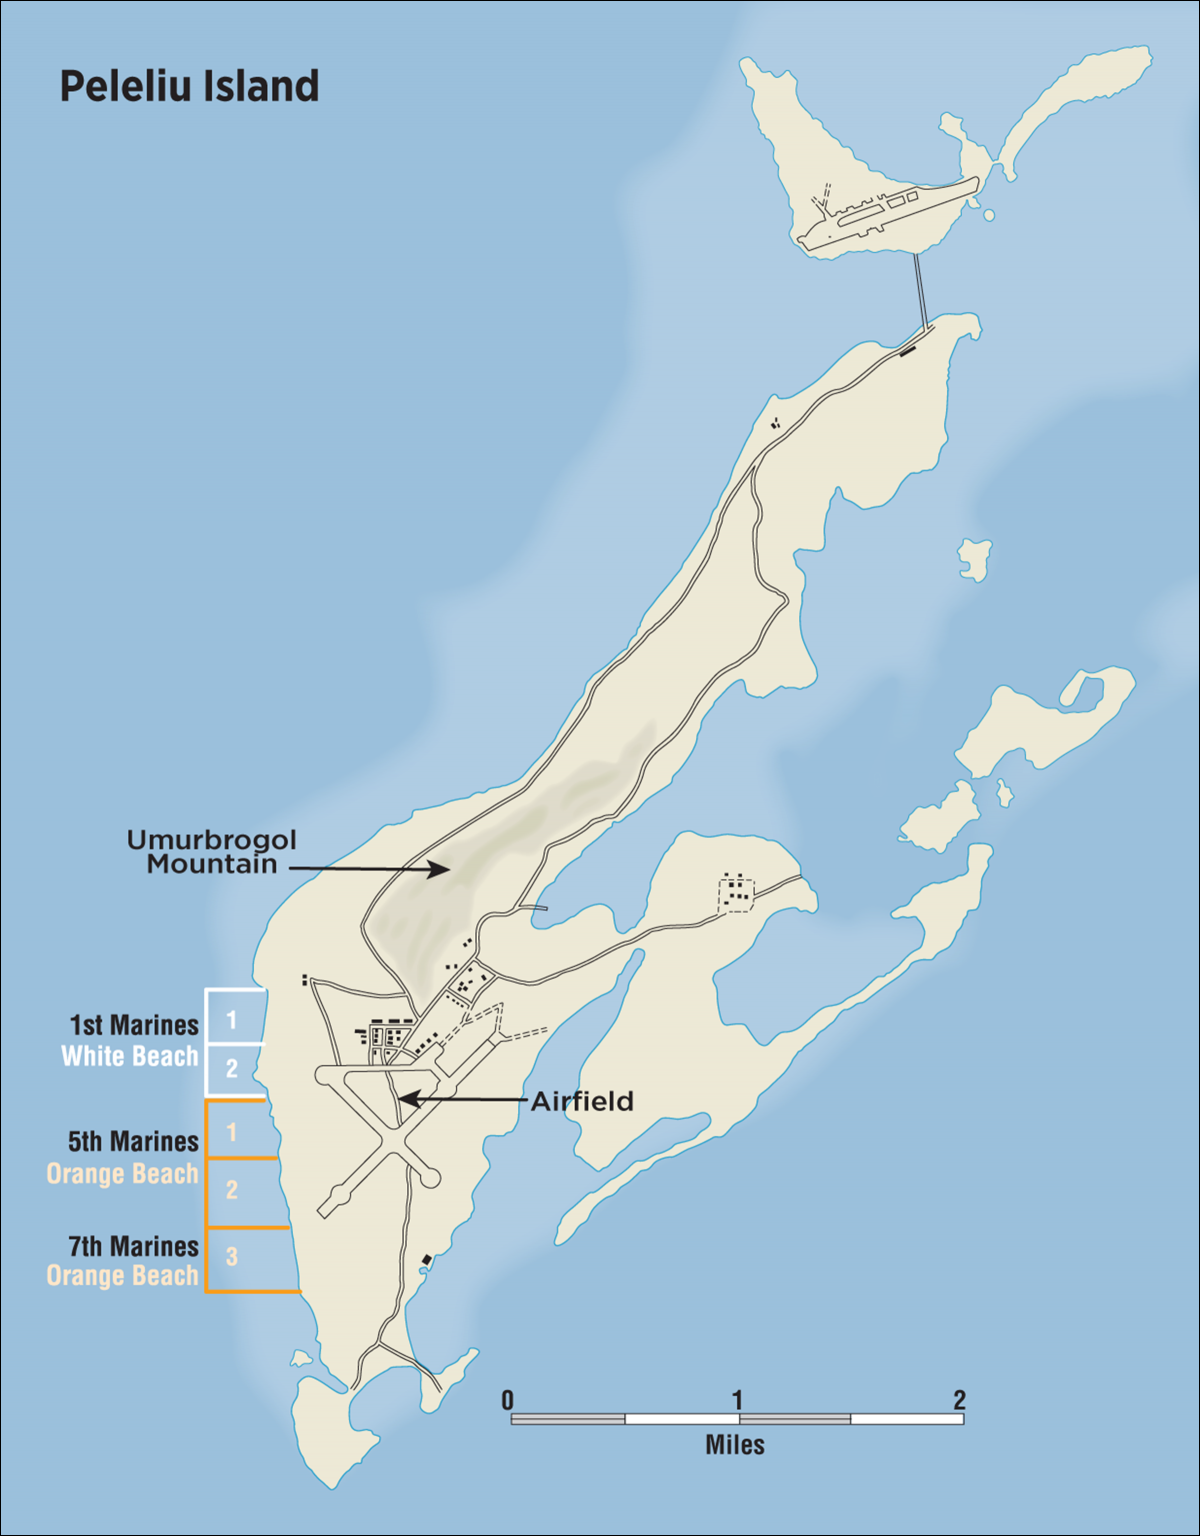 Map showing landing beaches on Peleliu Island